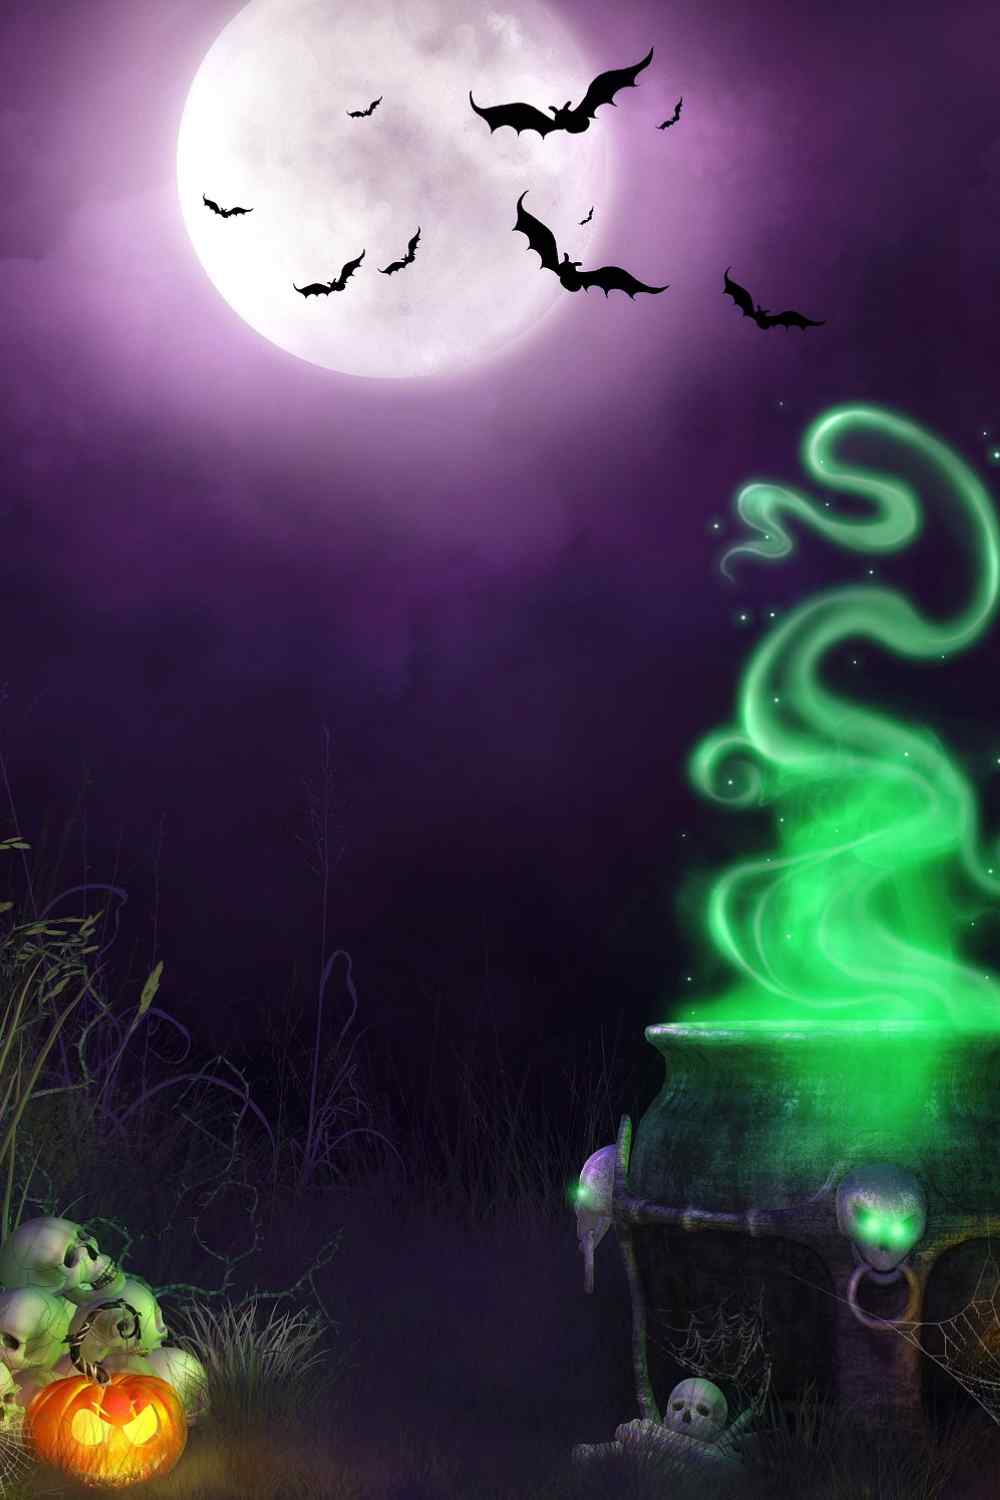 Spooky Halloween Skull Pumpkin Moon Night Backdrop IBD-246867 size:1x1.5